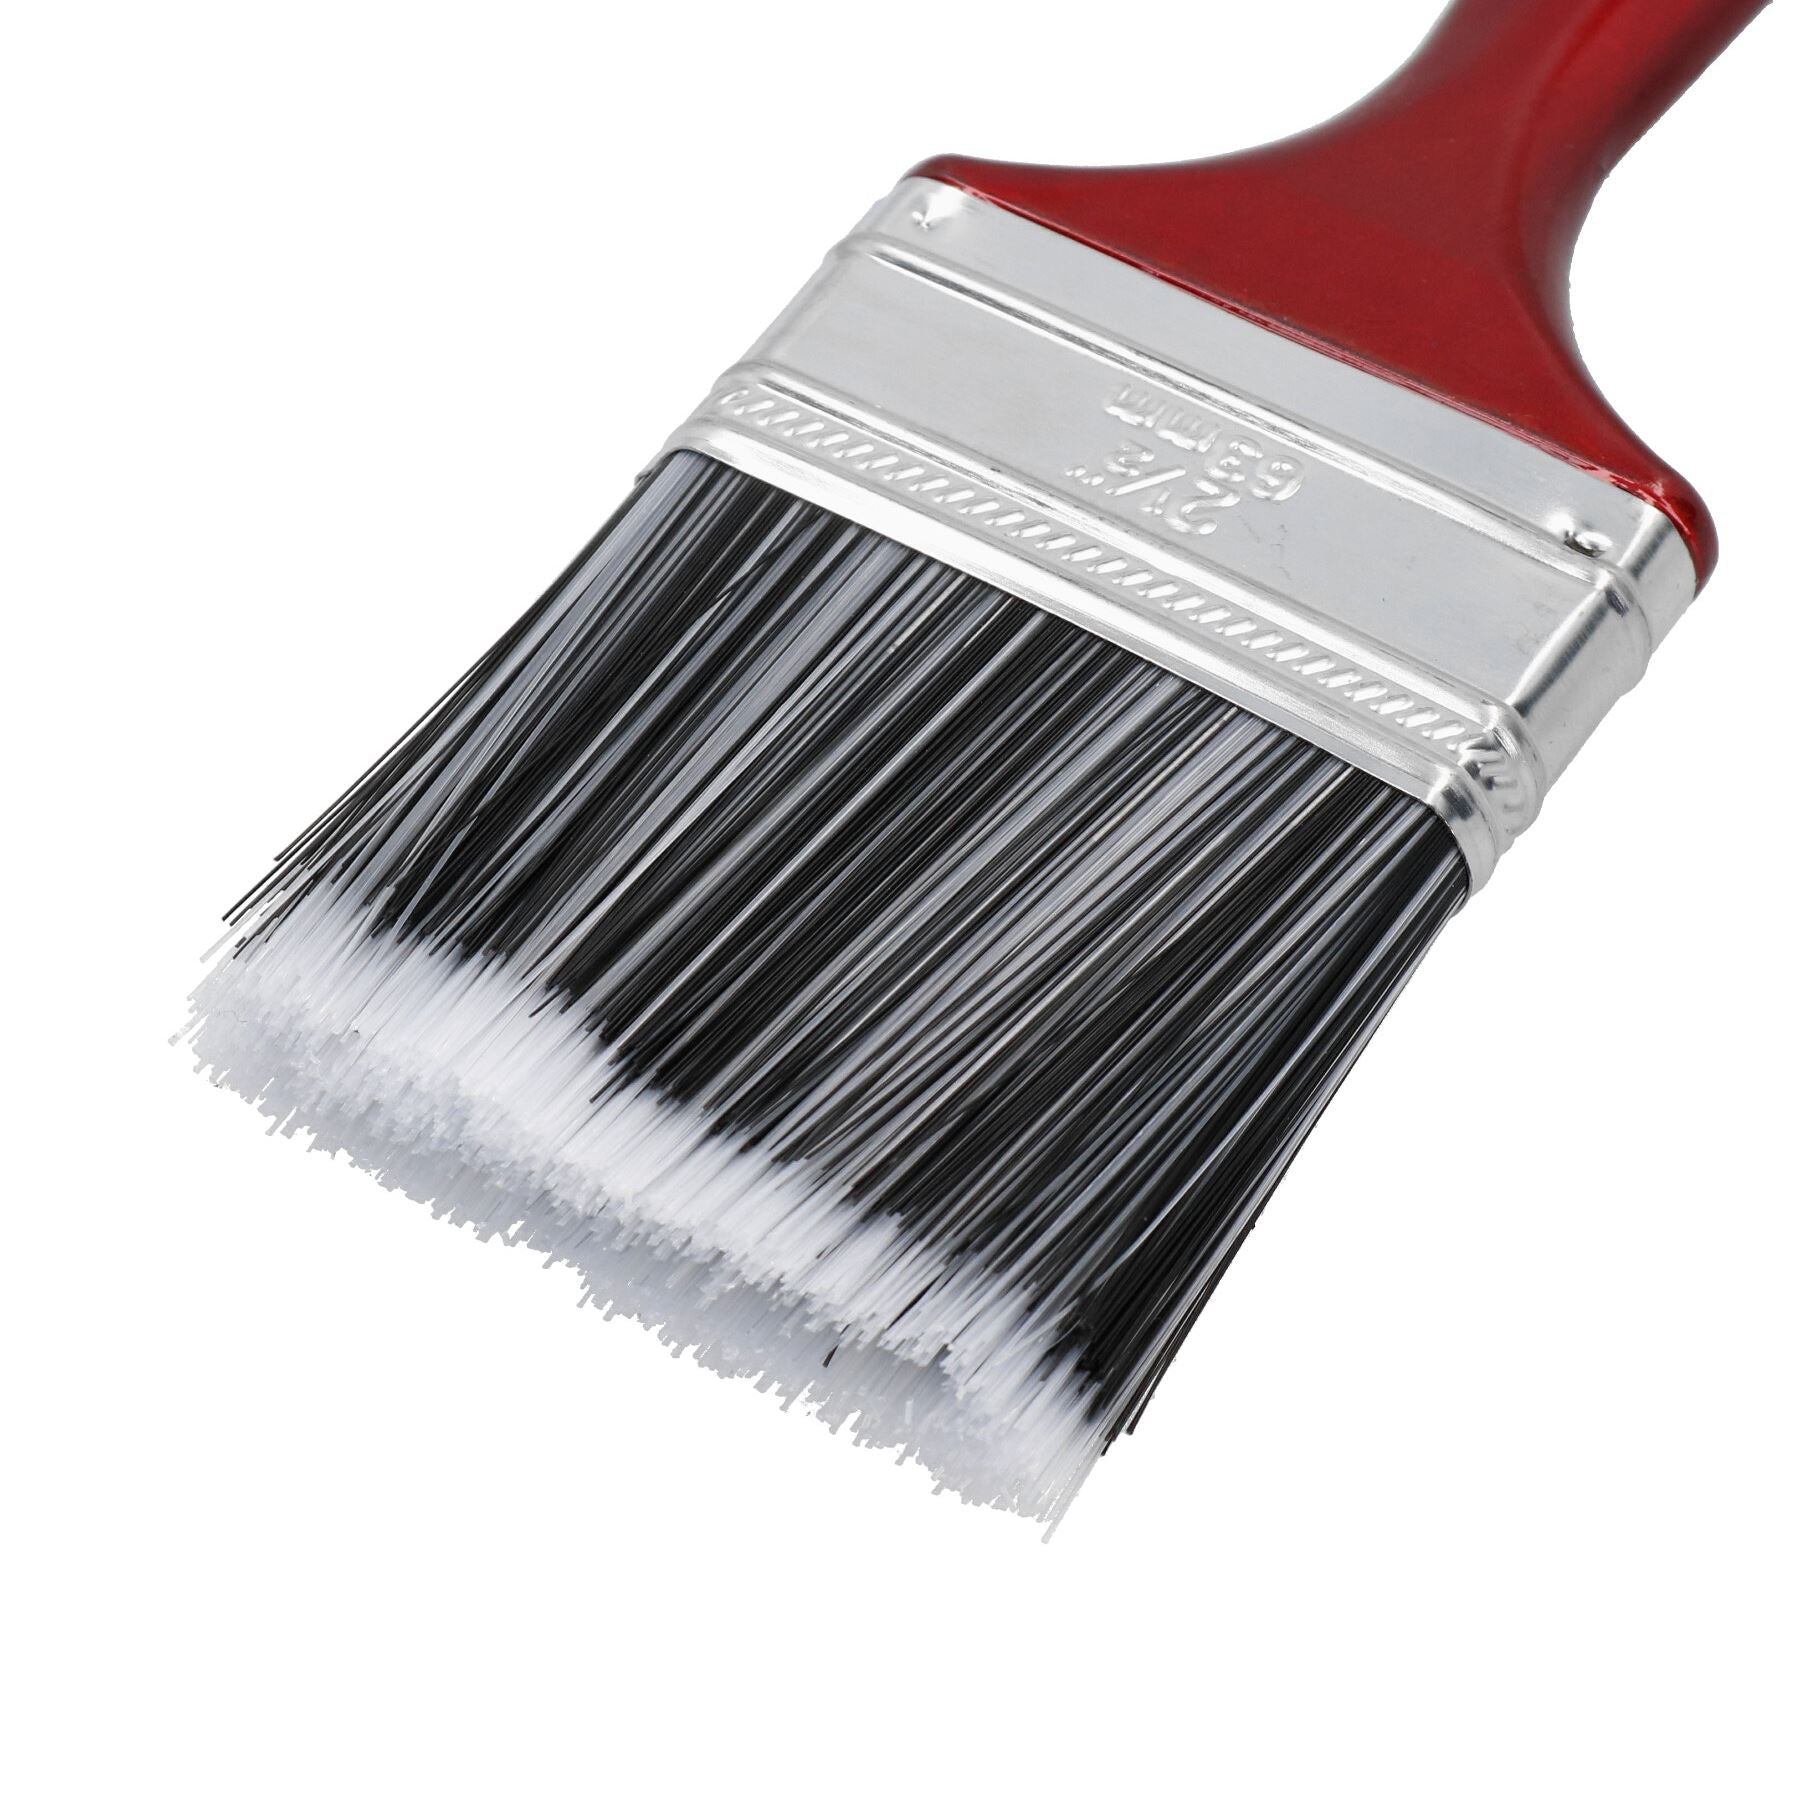 10pc Nylon bristle Paint Painting Brush Set Decorating 13mm – 63mm Wide Brushes